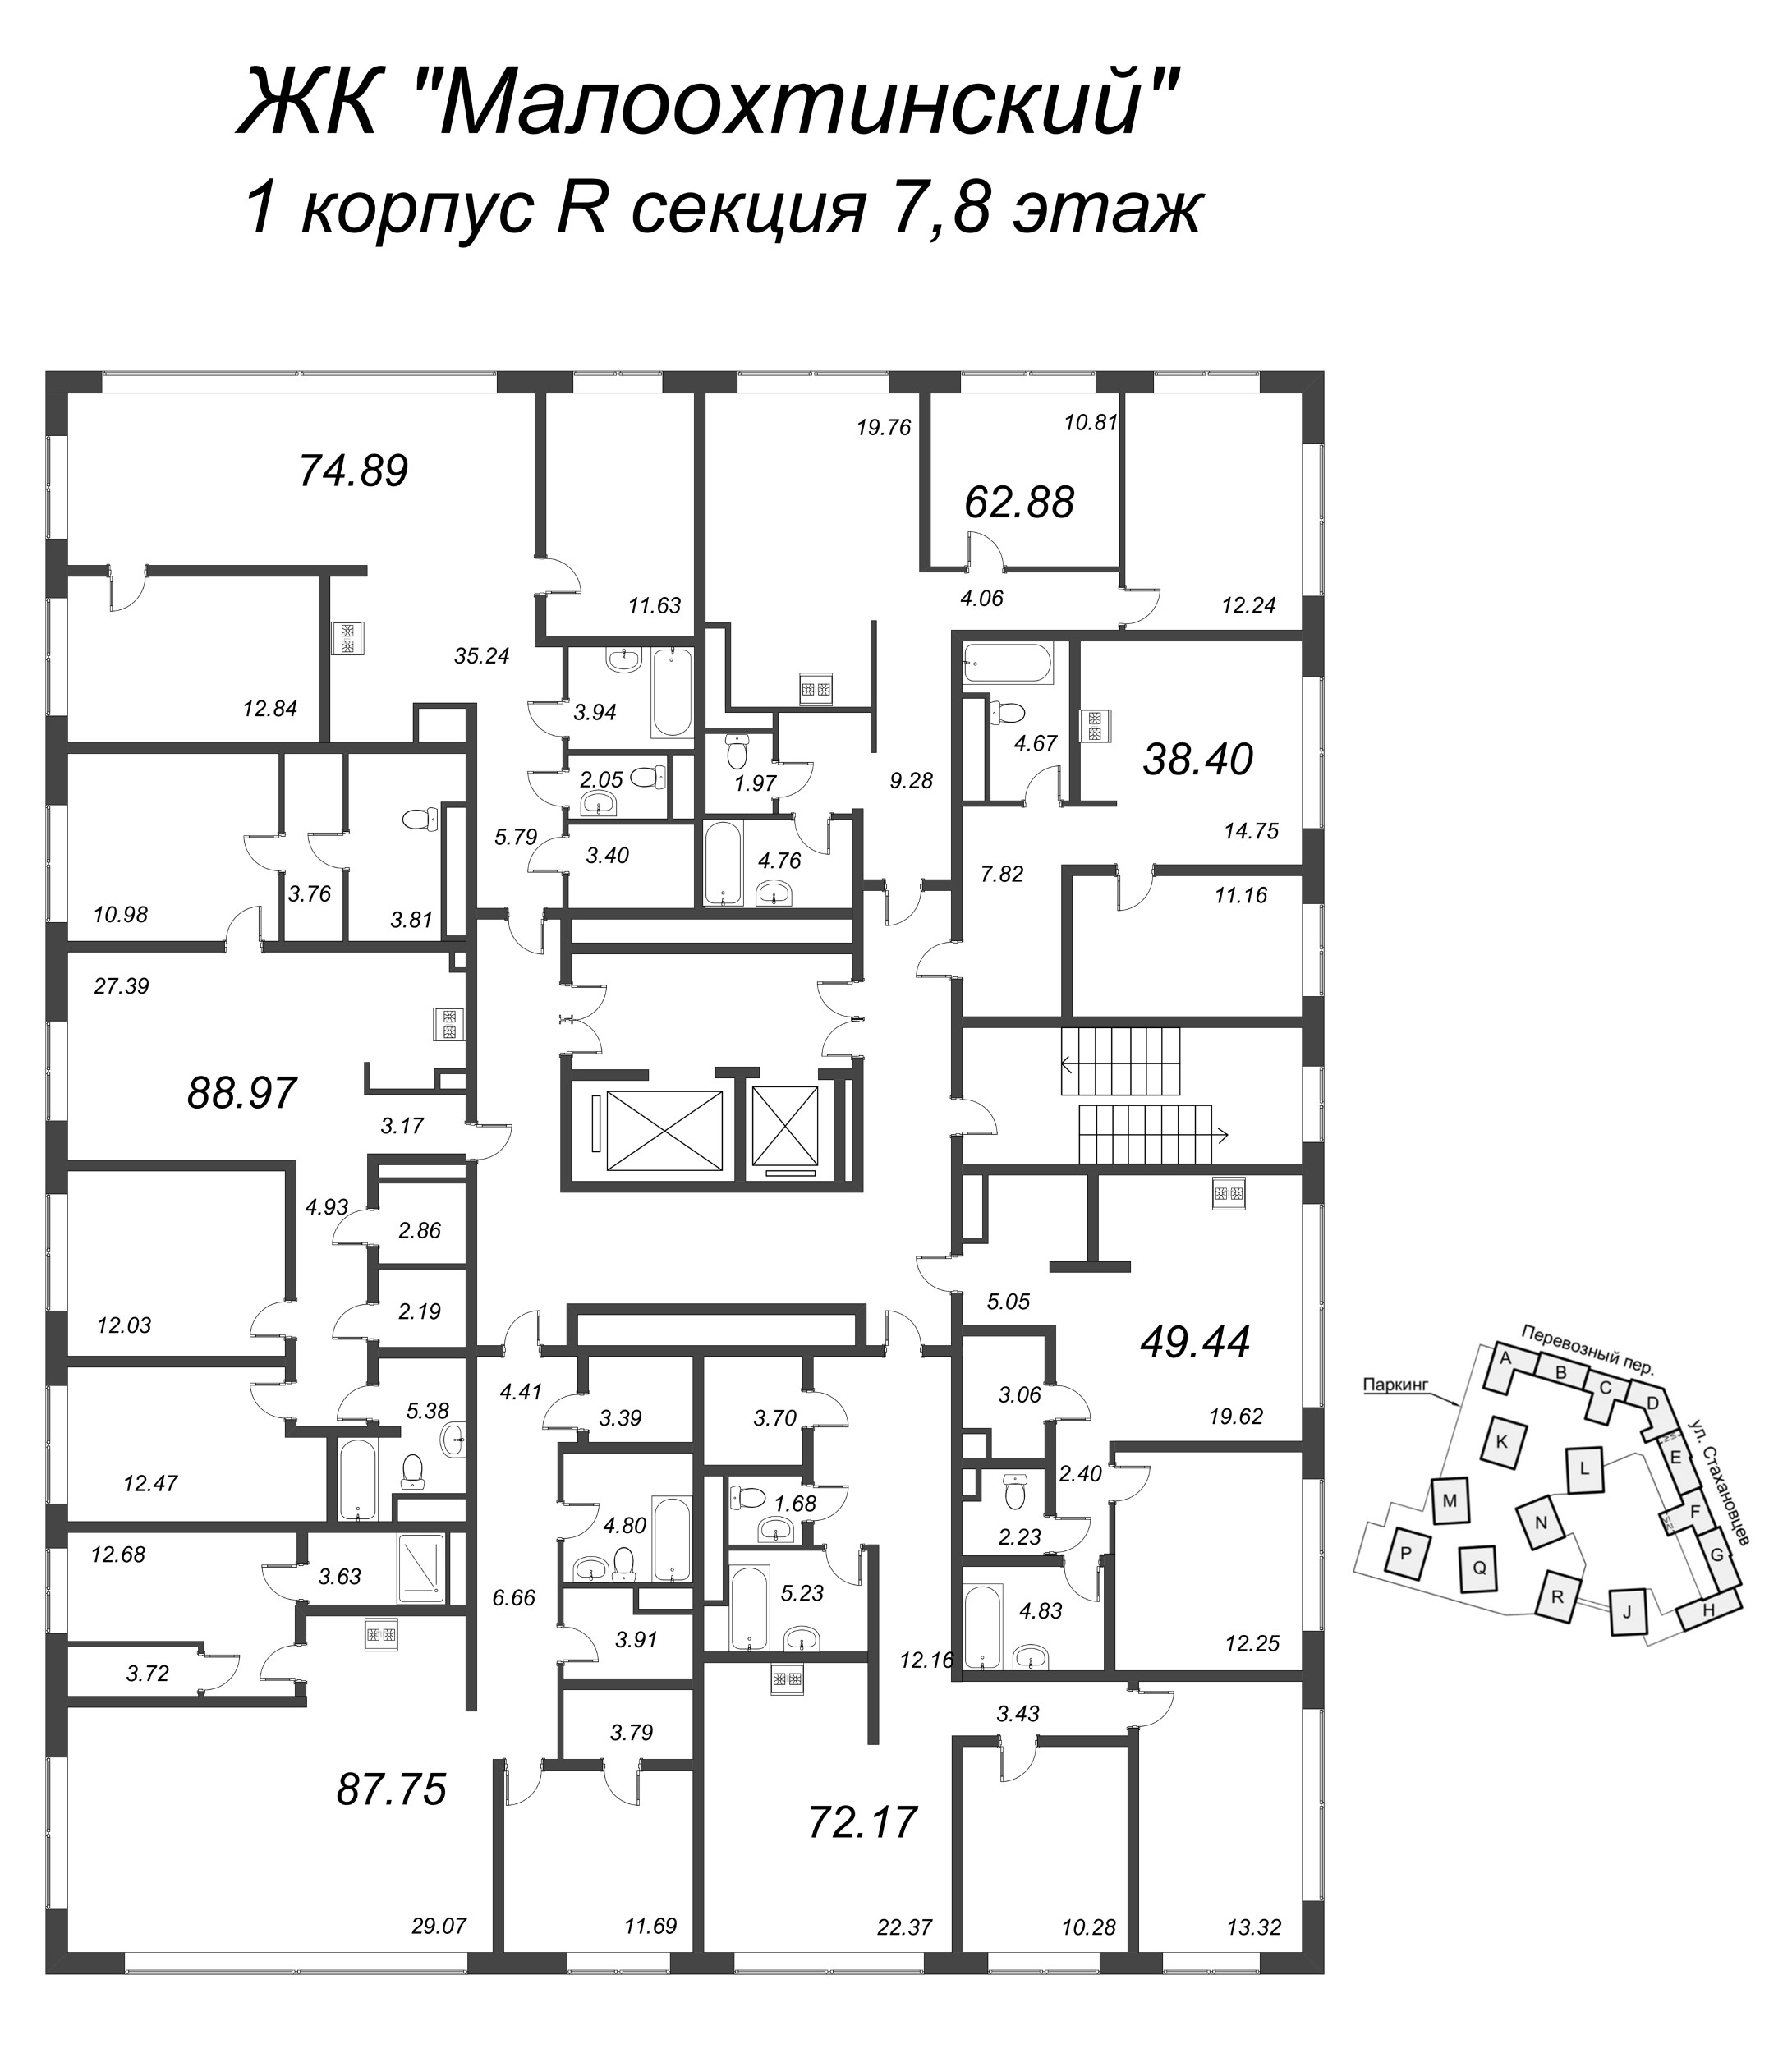 2-комнатная (Евро) квартира, 39.6 м² - планировка этажа